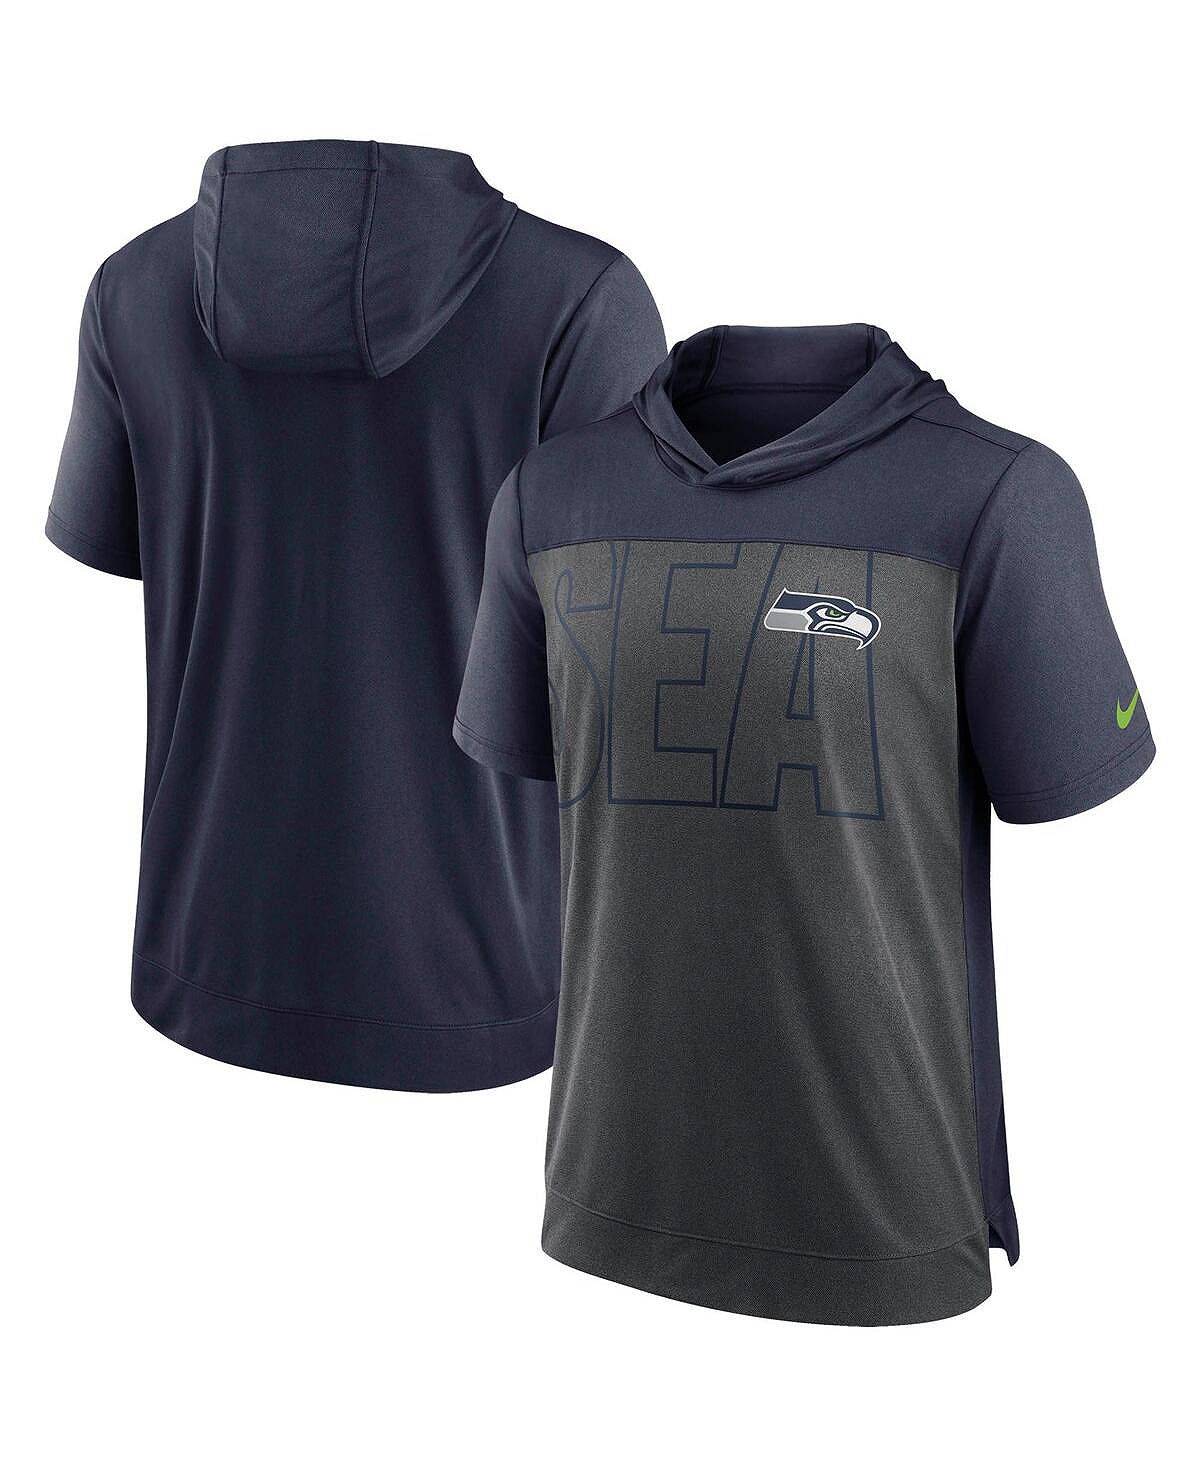 printio футболка классическая seattle seahawks Мужская футболка с капюшоном цвета темно-серого меланжевого цвета college navy seattle seahawks performance hoodie Nike, мульти